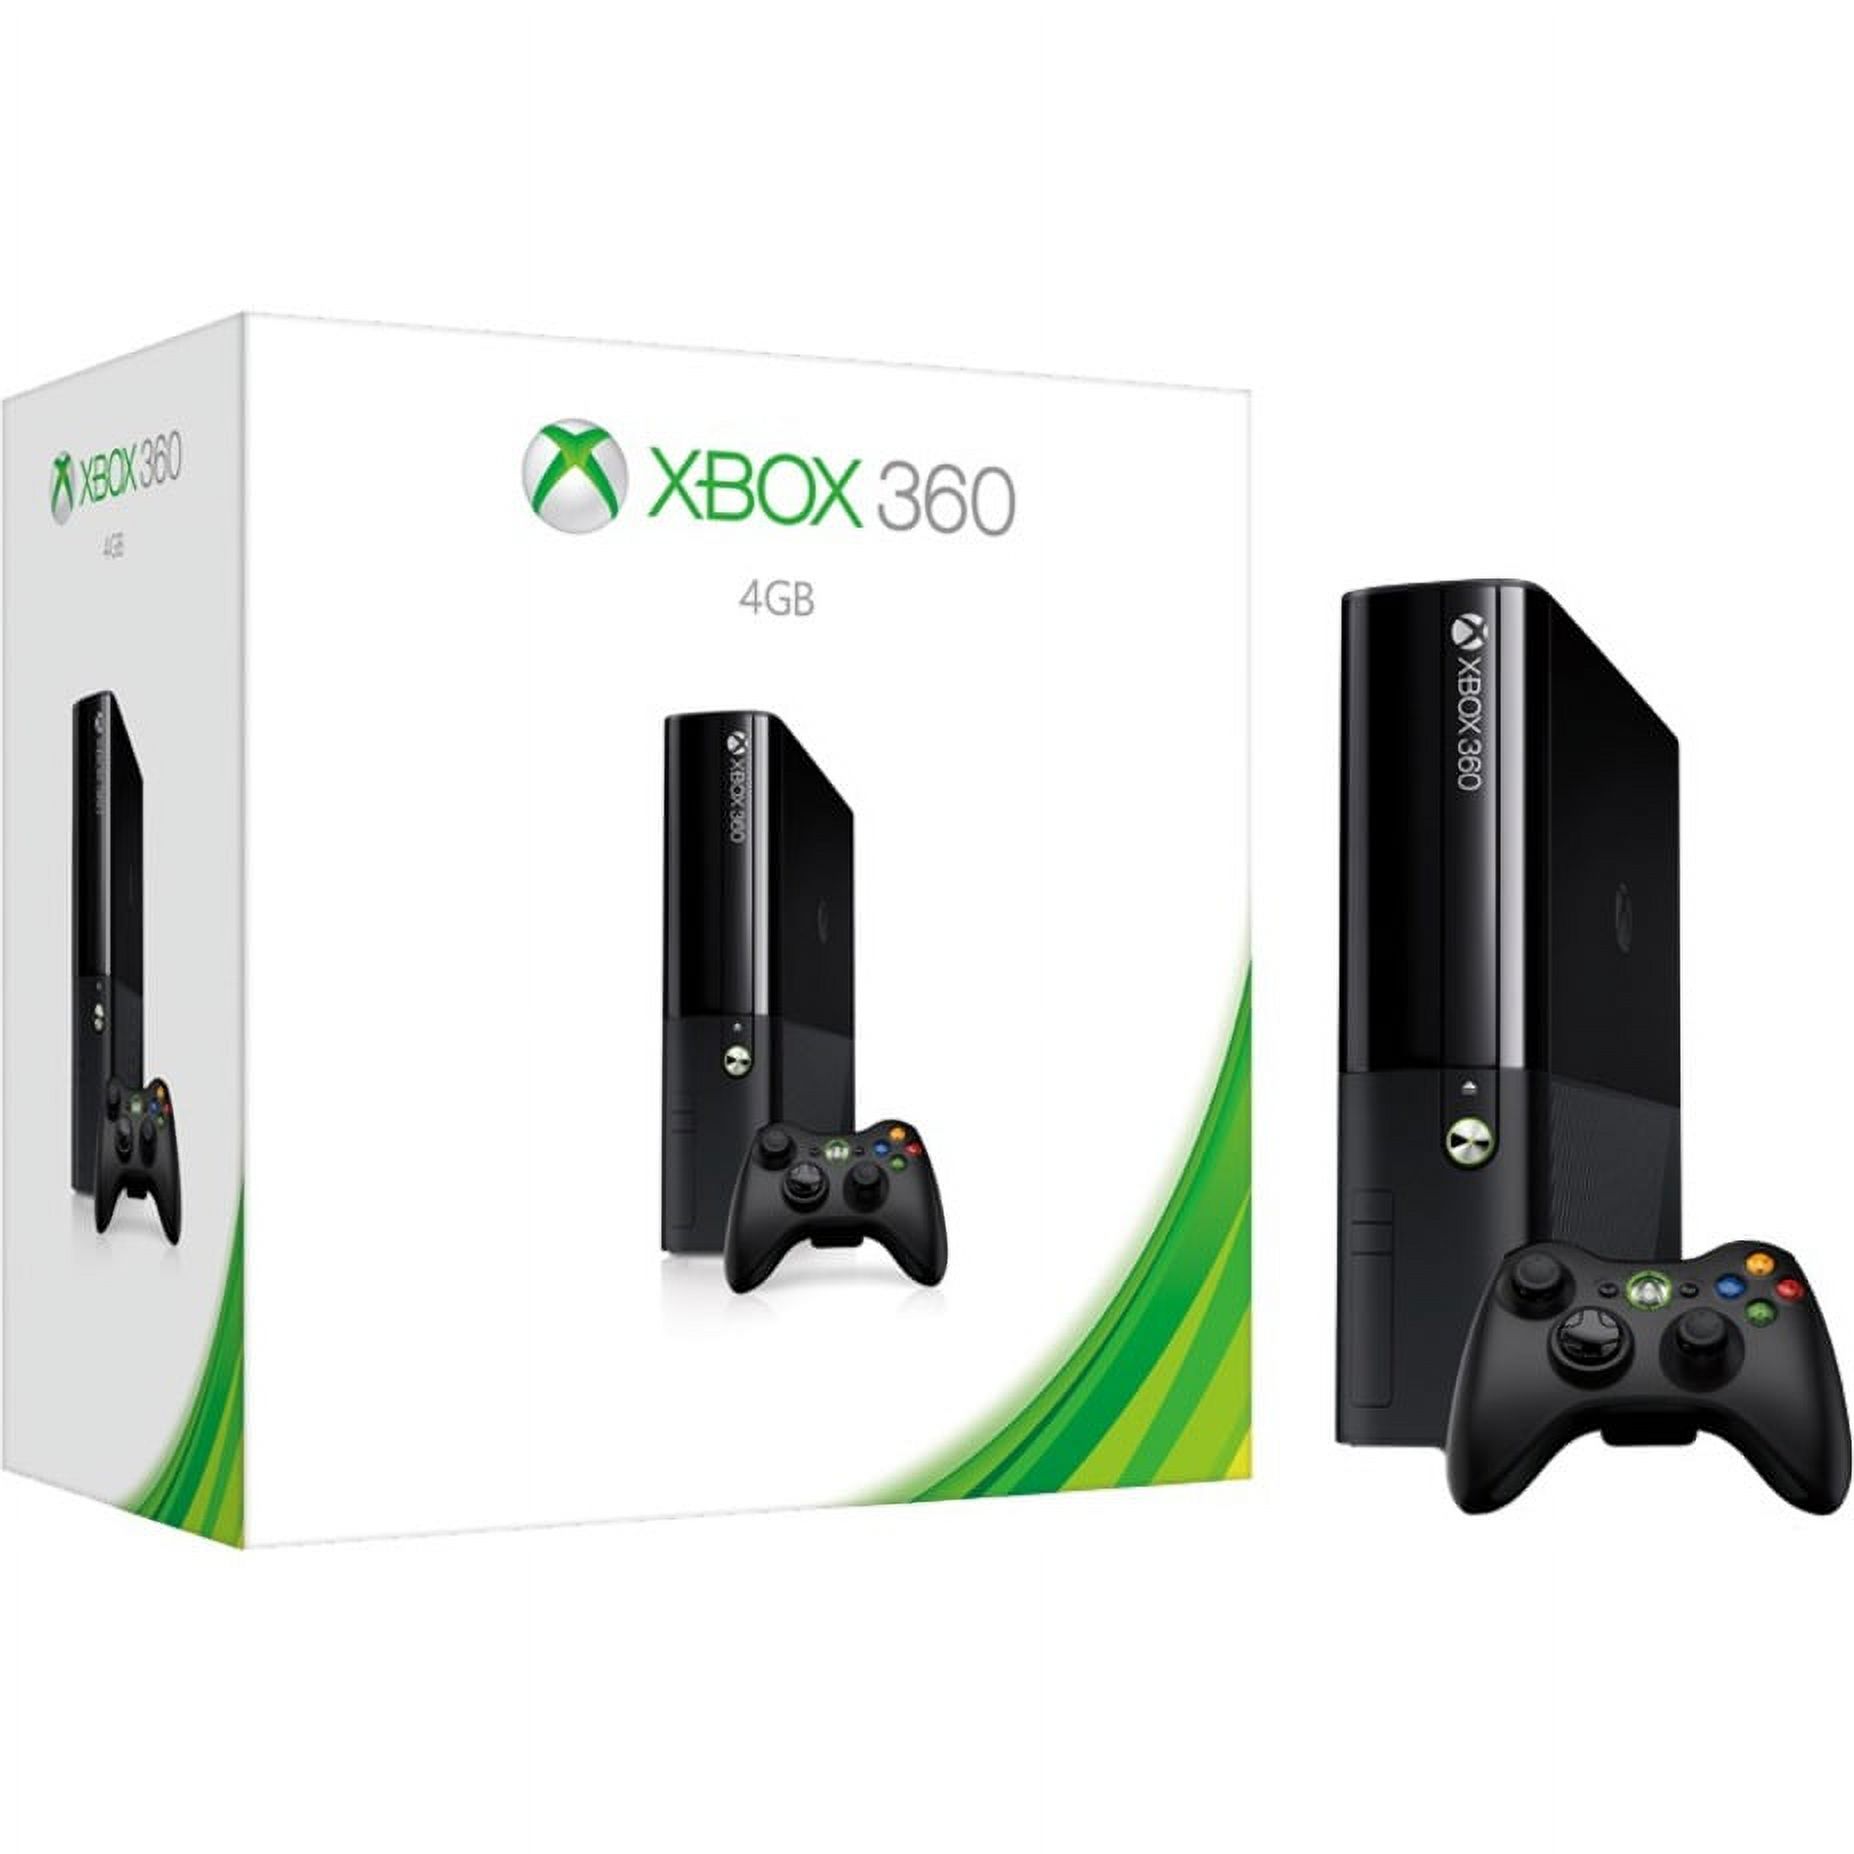 Microsoft Xbox 360 4GB Console - image 1 of 6